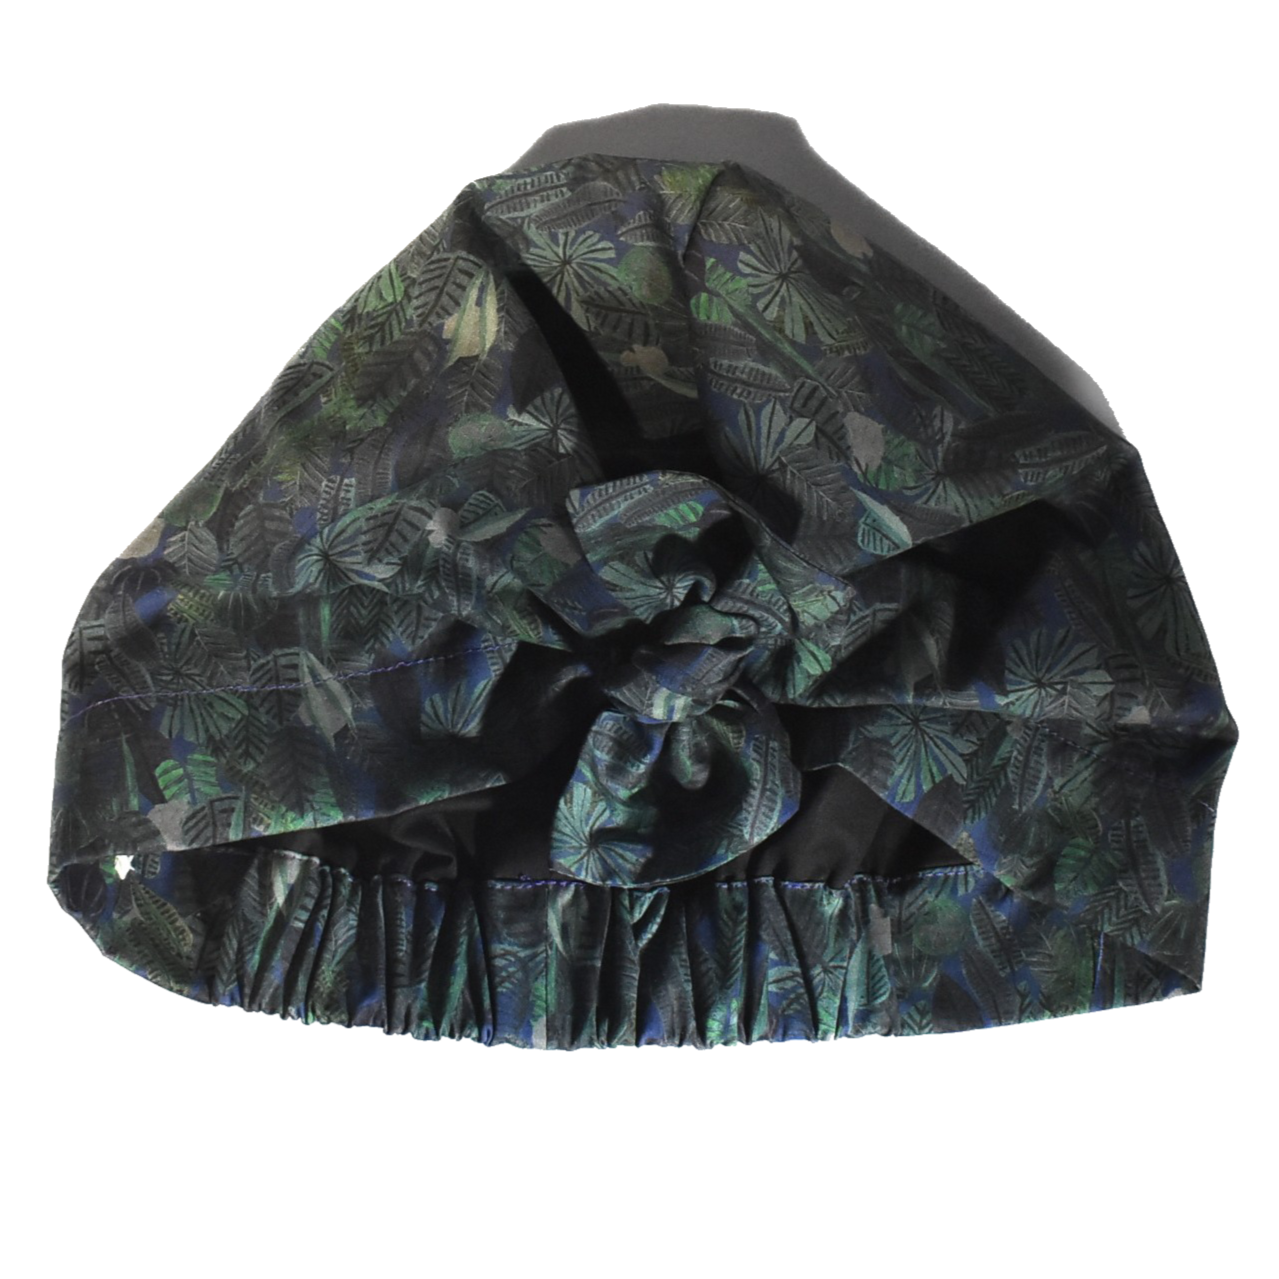 Ladies Turban Hat - Liberty of London Chaparrel - Navy and Green Fern Print